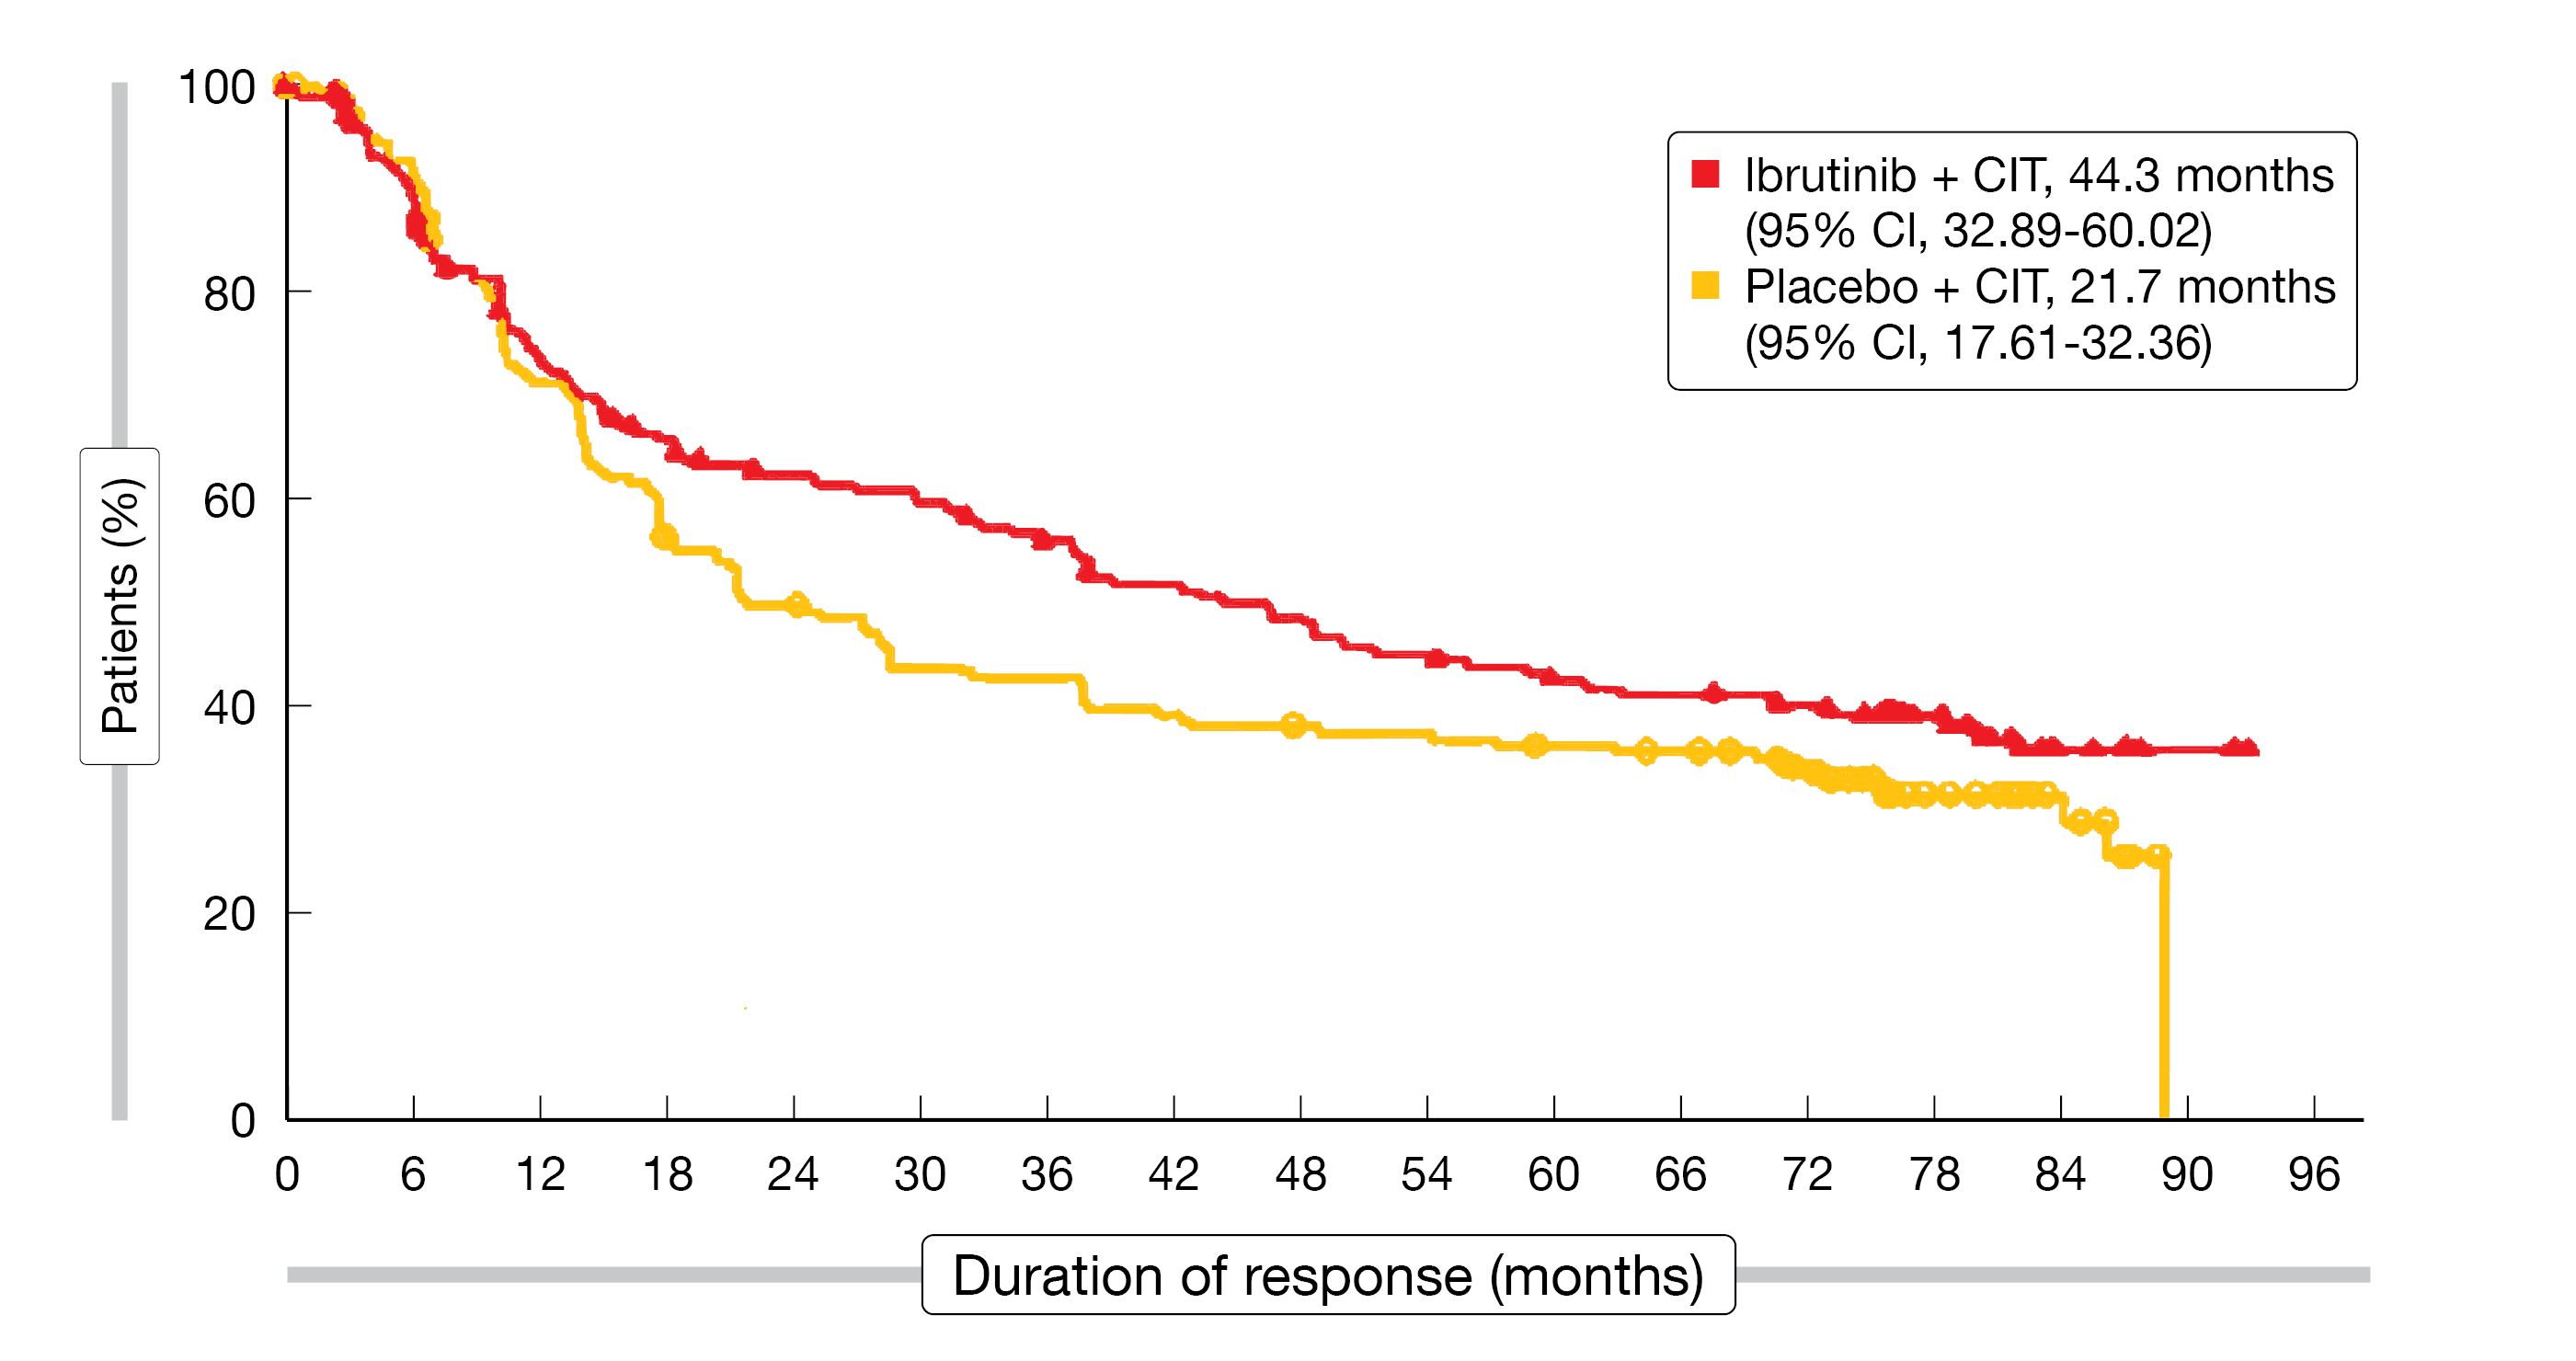 Figure 1: Duration of response with ibrutinib vs. placebo plus chemoimmunotherapy